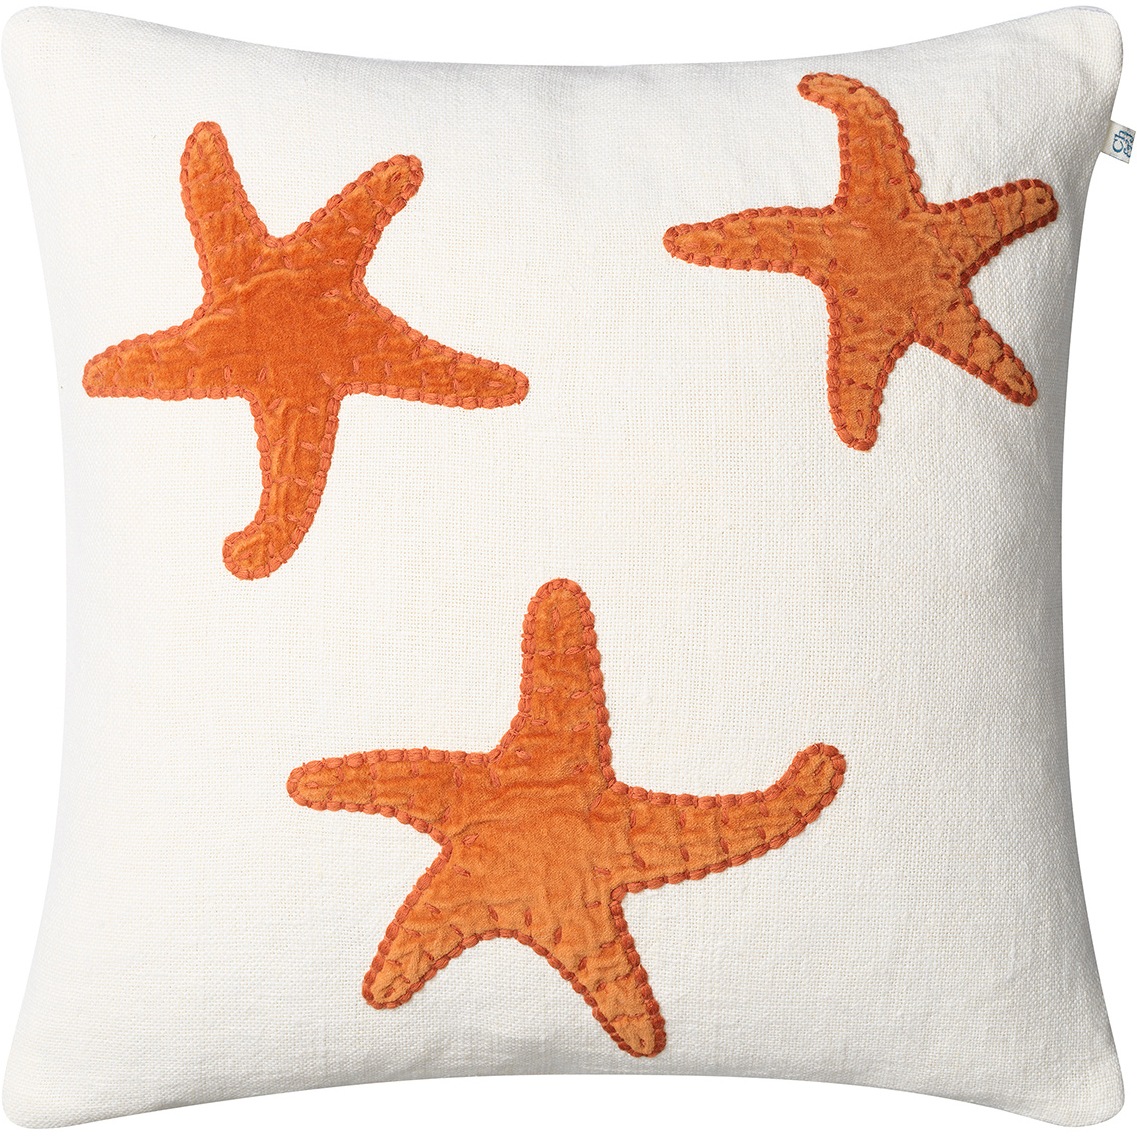 Star Fish Cushion Cover 50x50 cm, Off-white / Orange